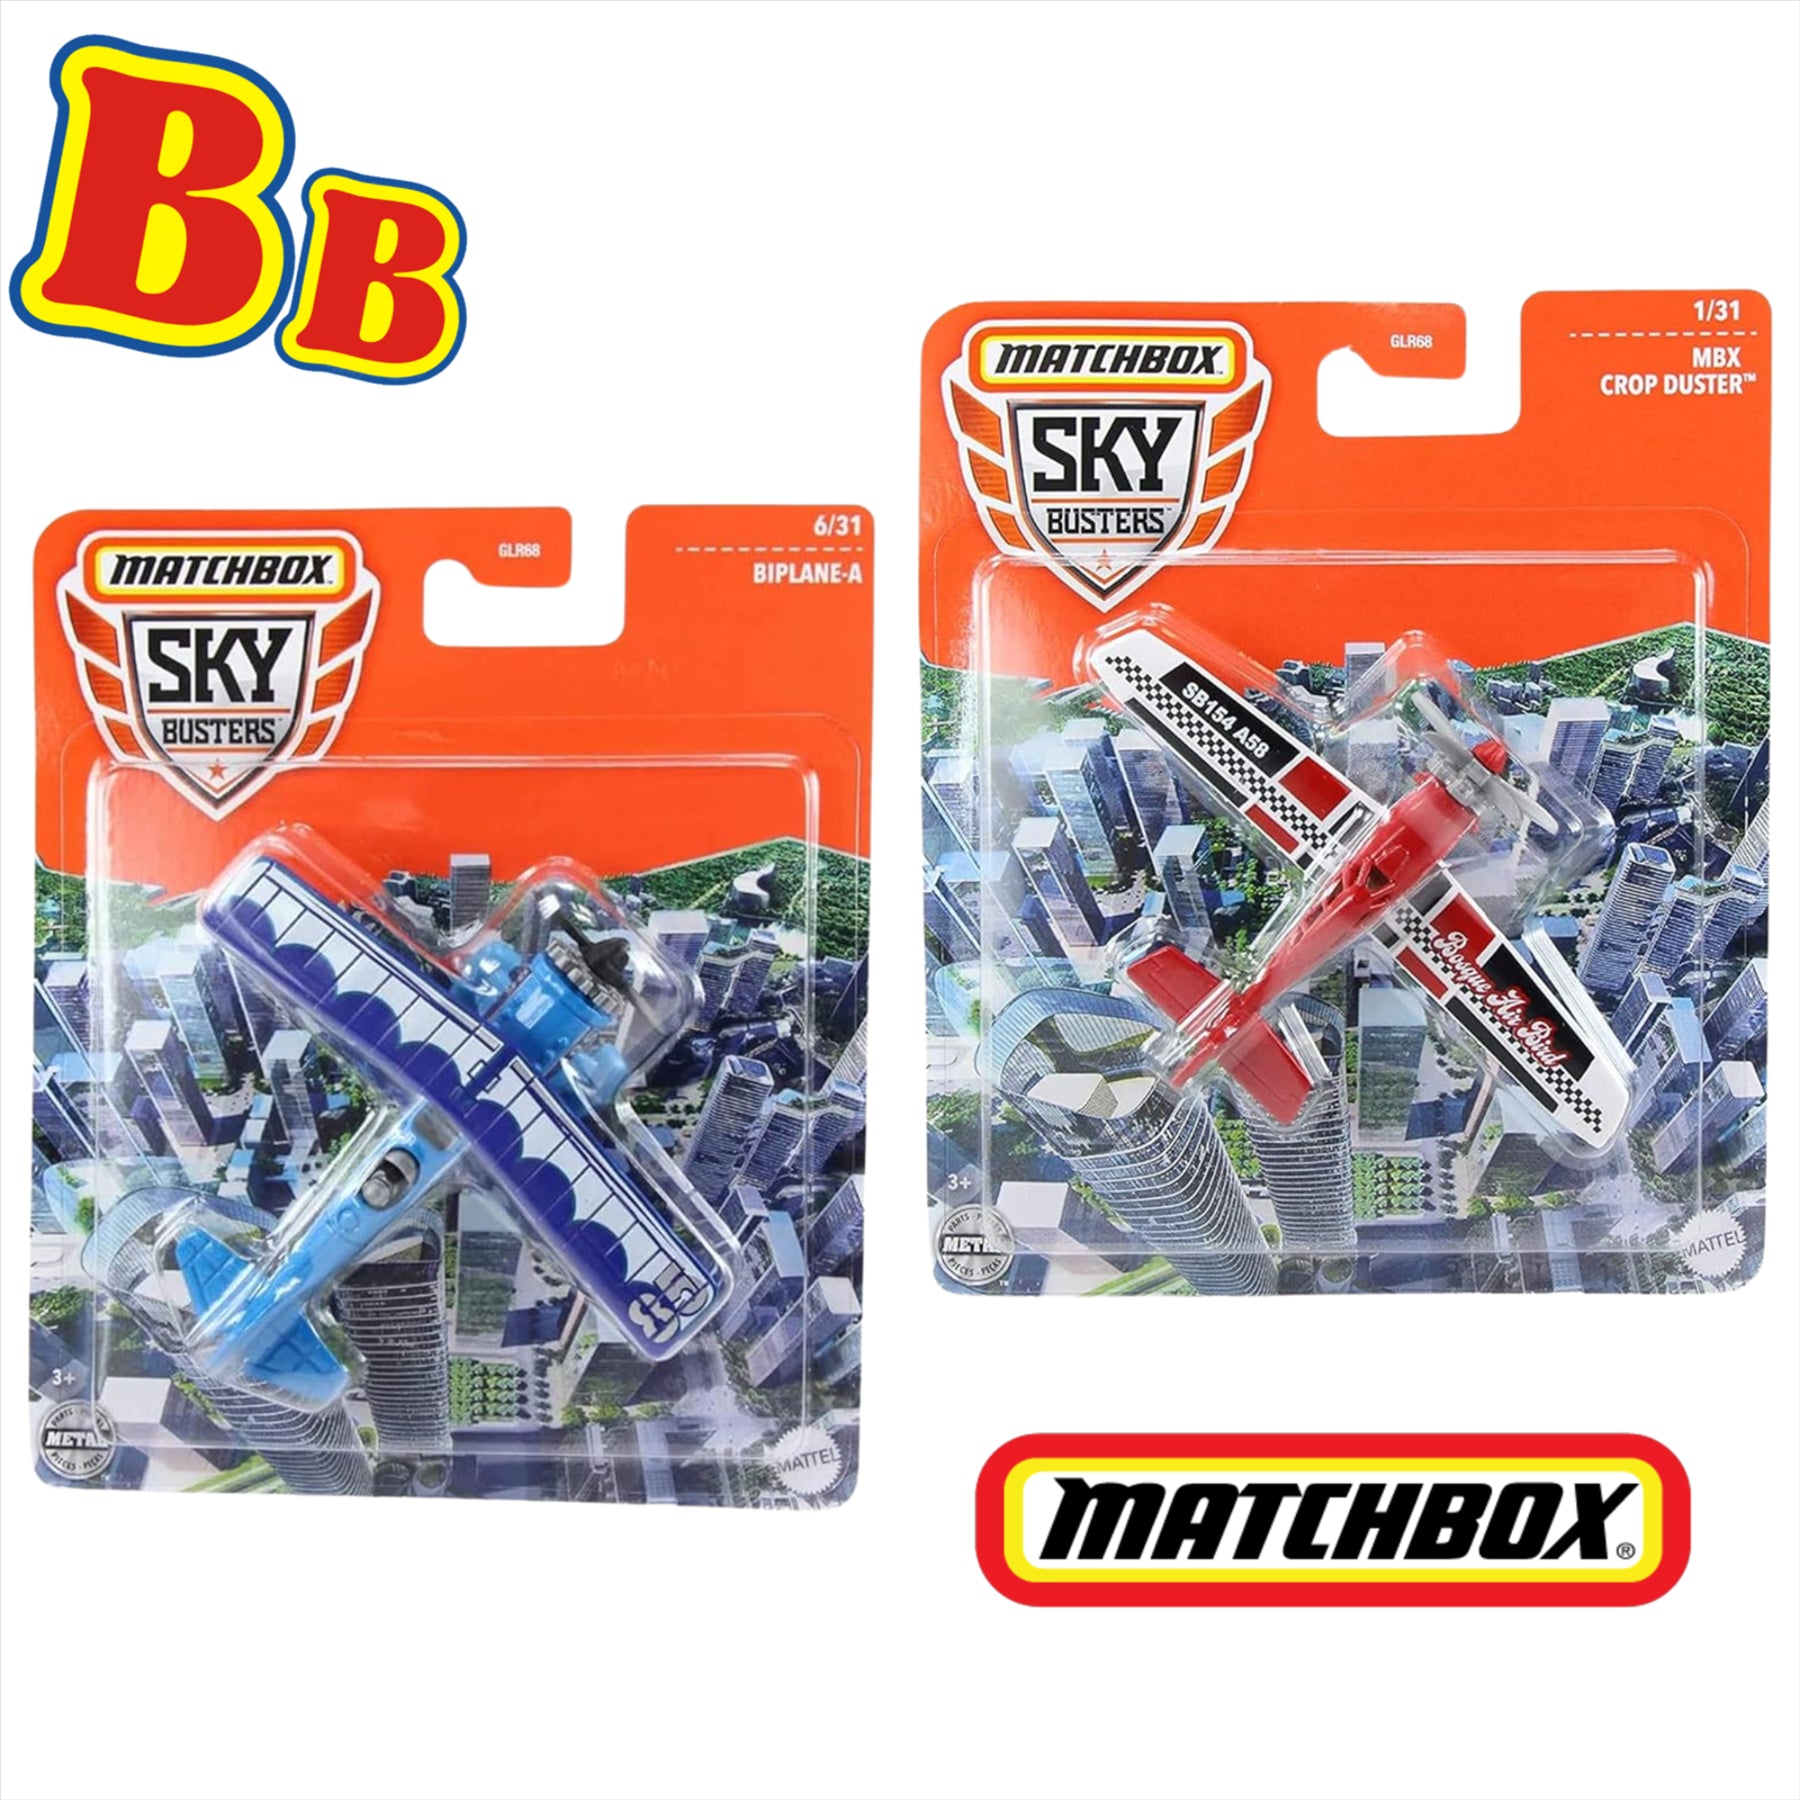 Matchbox Sky Busters Diecast Models 2 Pack Bundle - Biplane-A & MBX Crop Duster - Toptoys2u